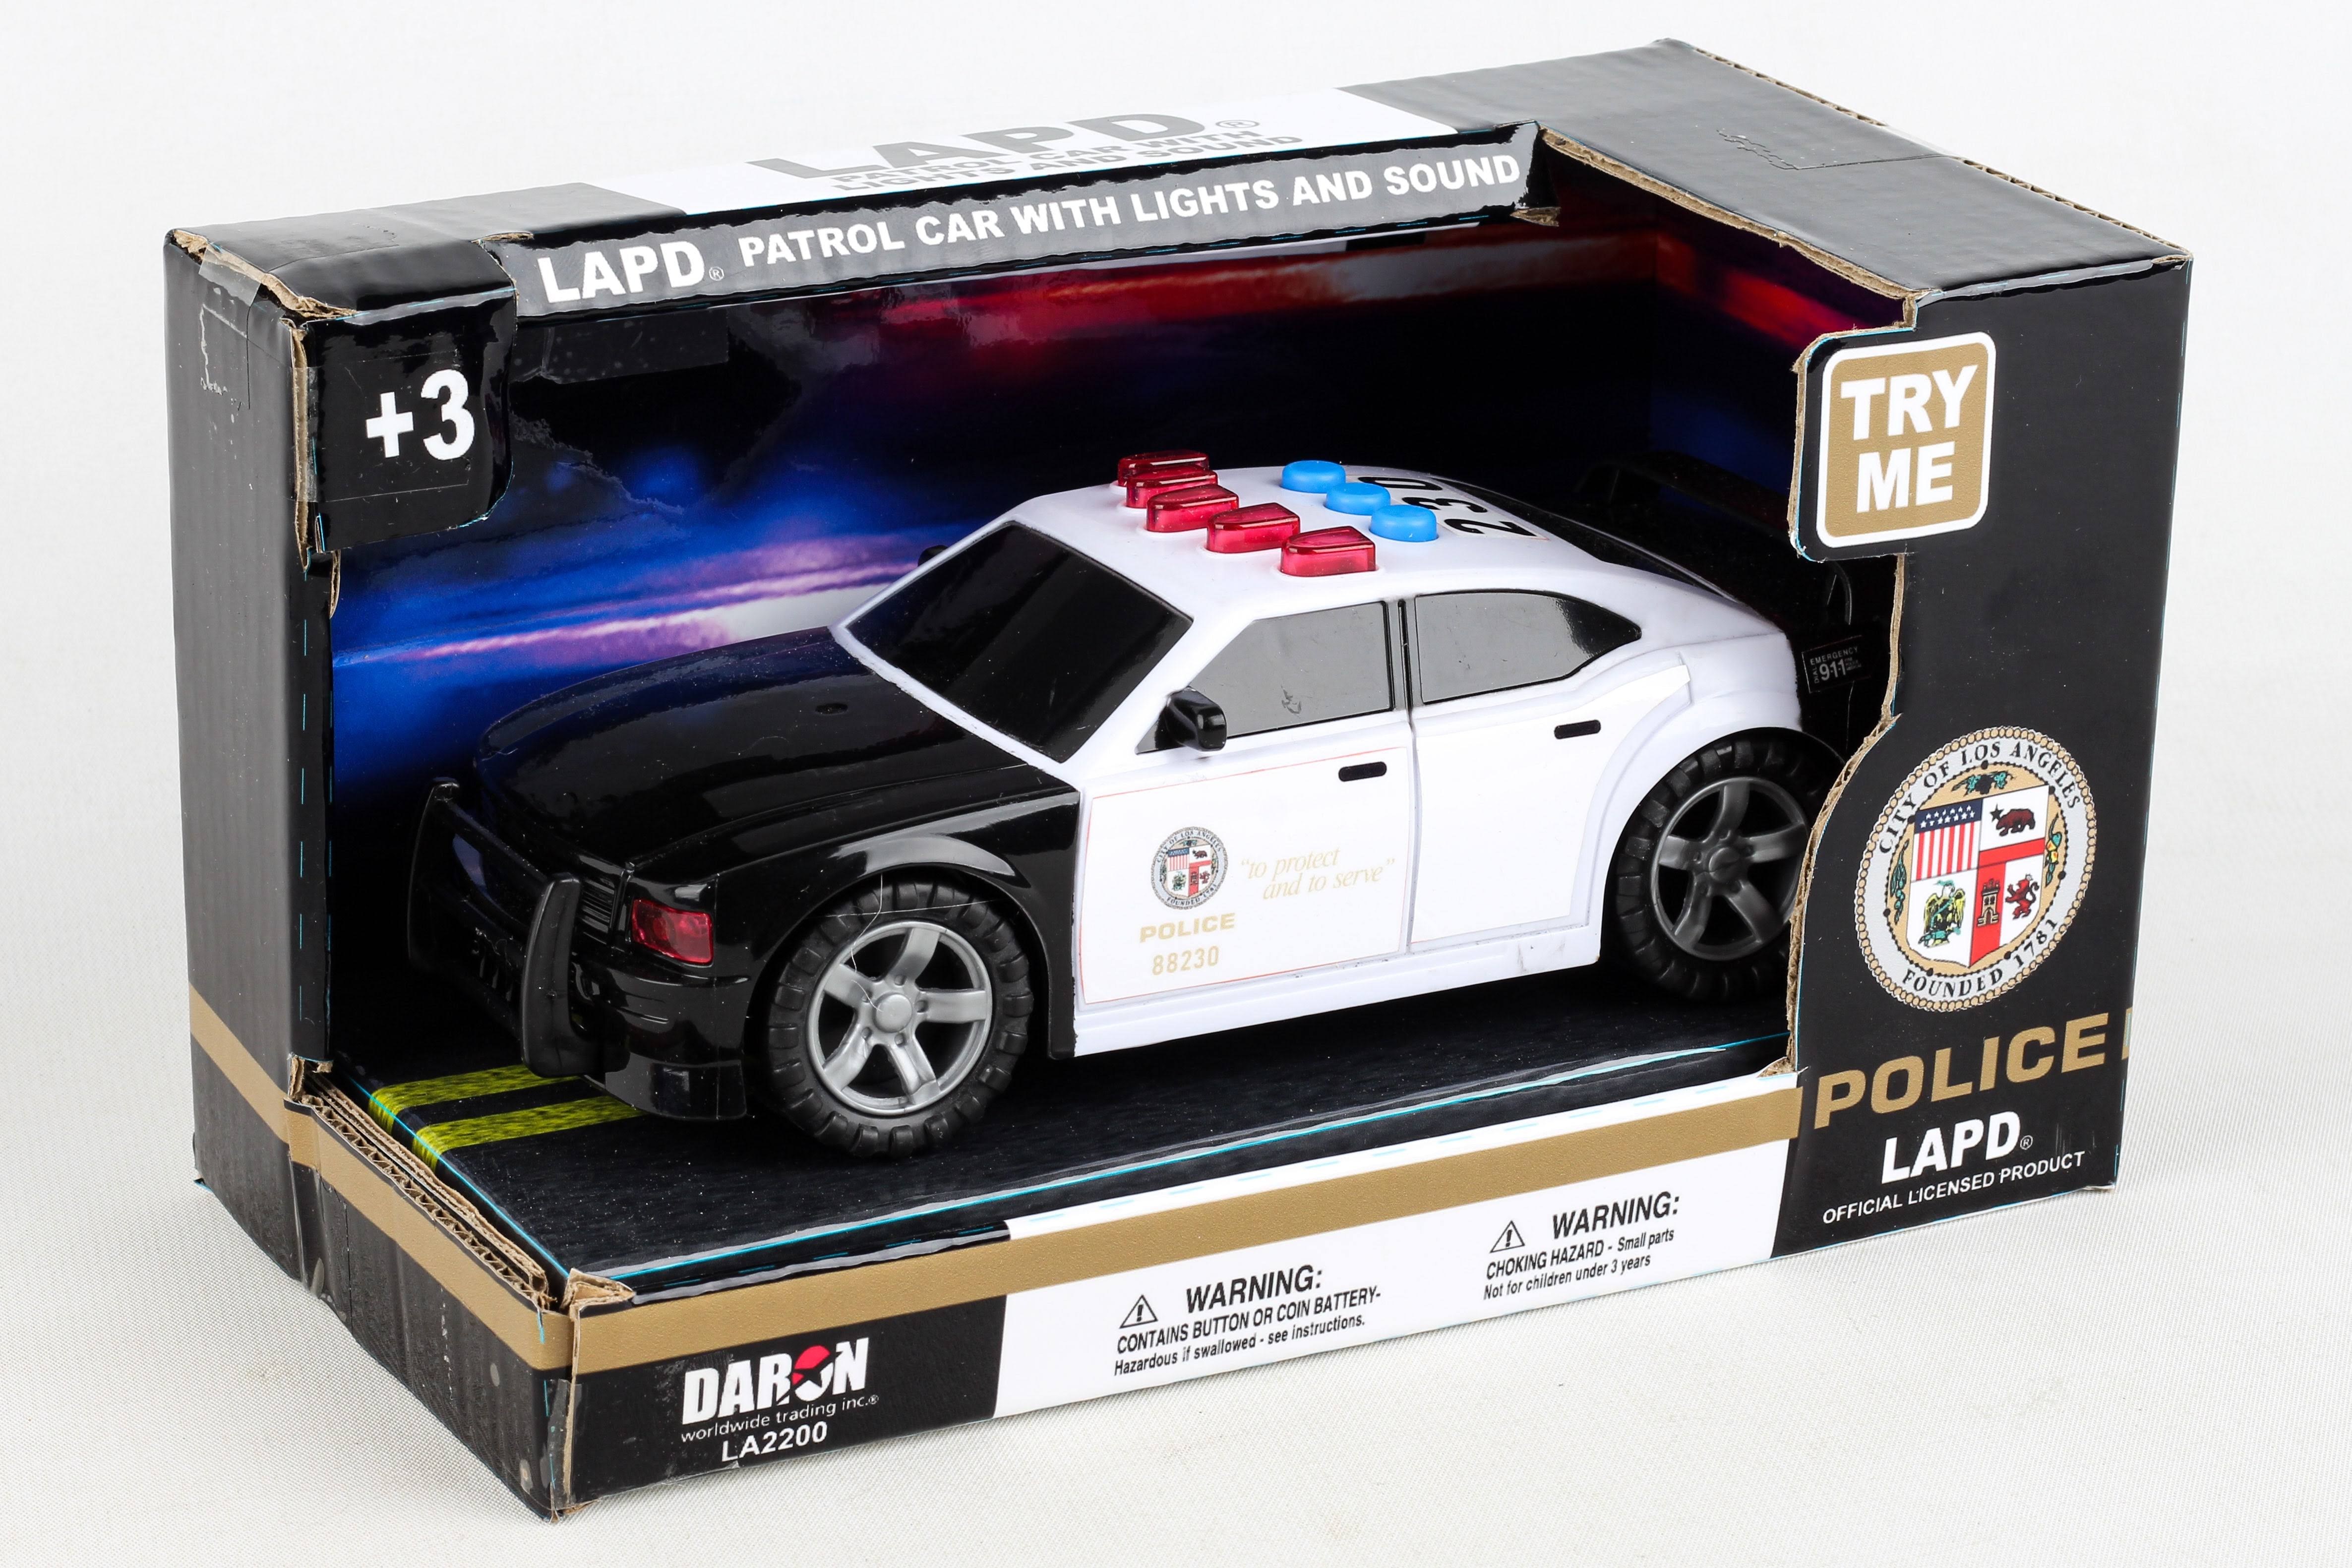 Daron La2200 Lapd Police Car With Lights & Sound Toy Daron Toys